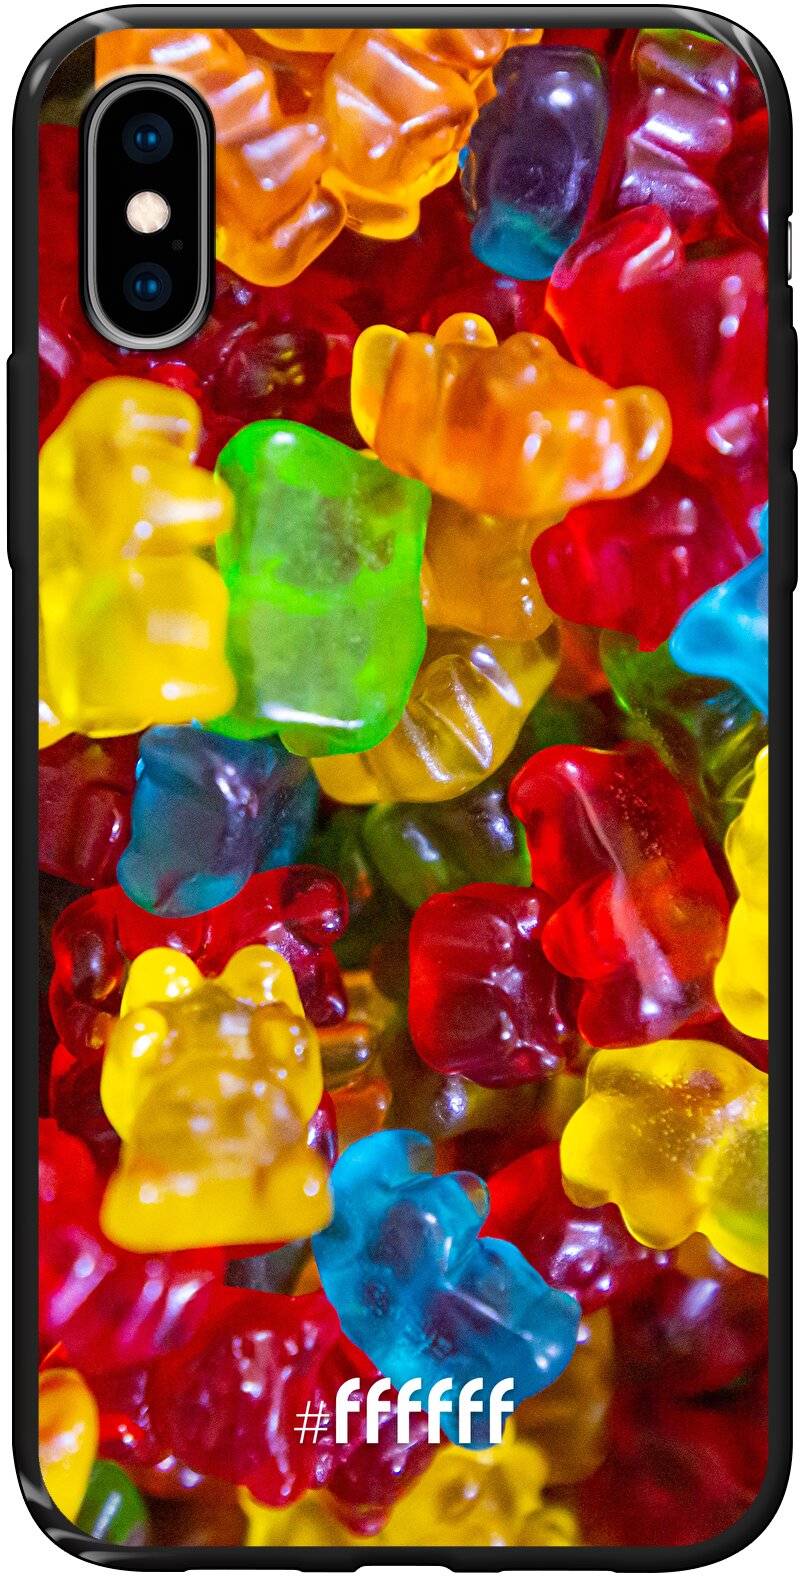 Gummy Bears iPhone X